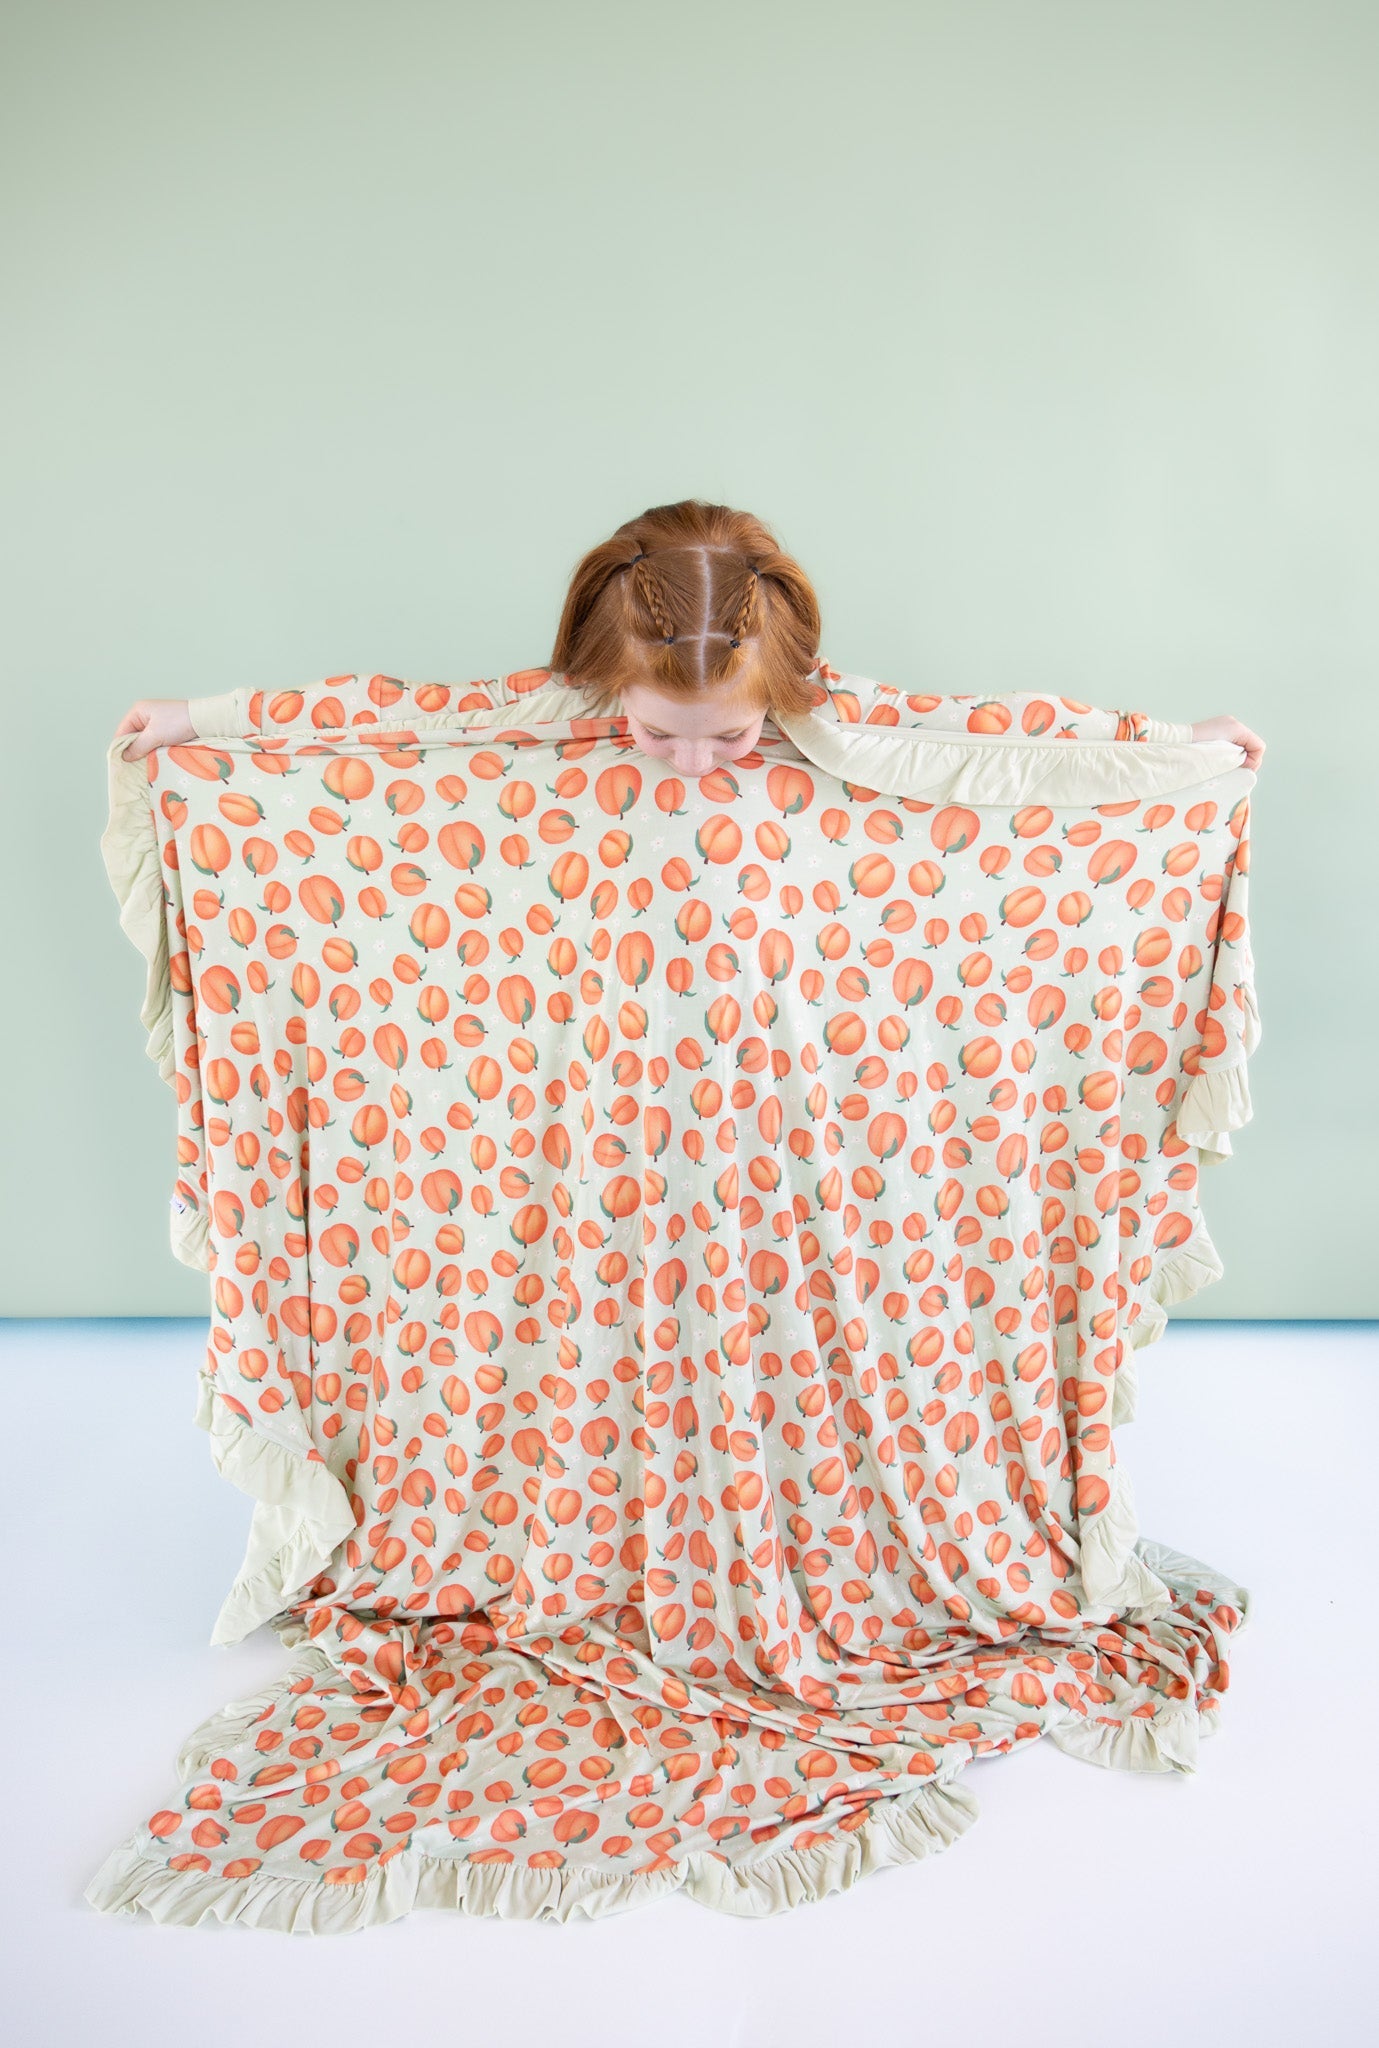 Peachy-keen Dream Blanket